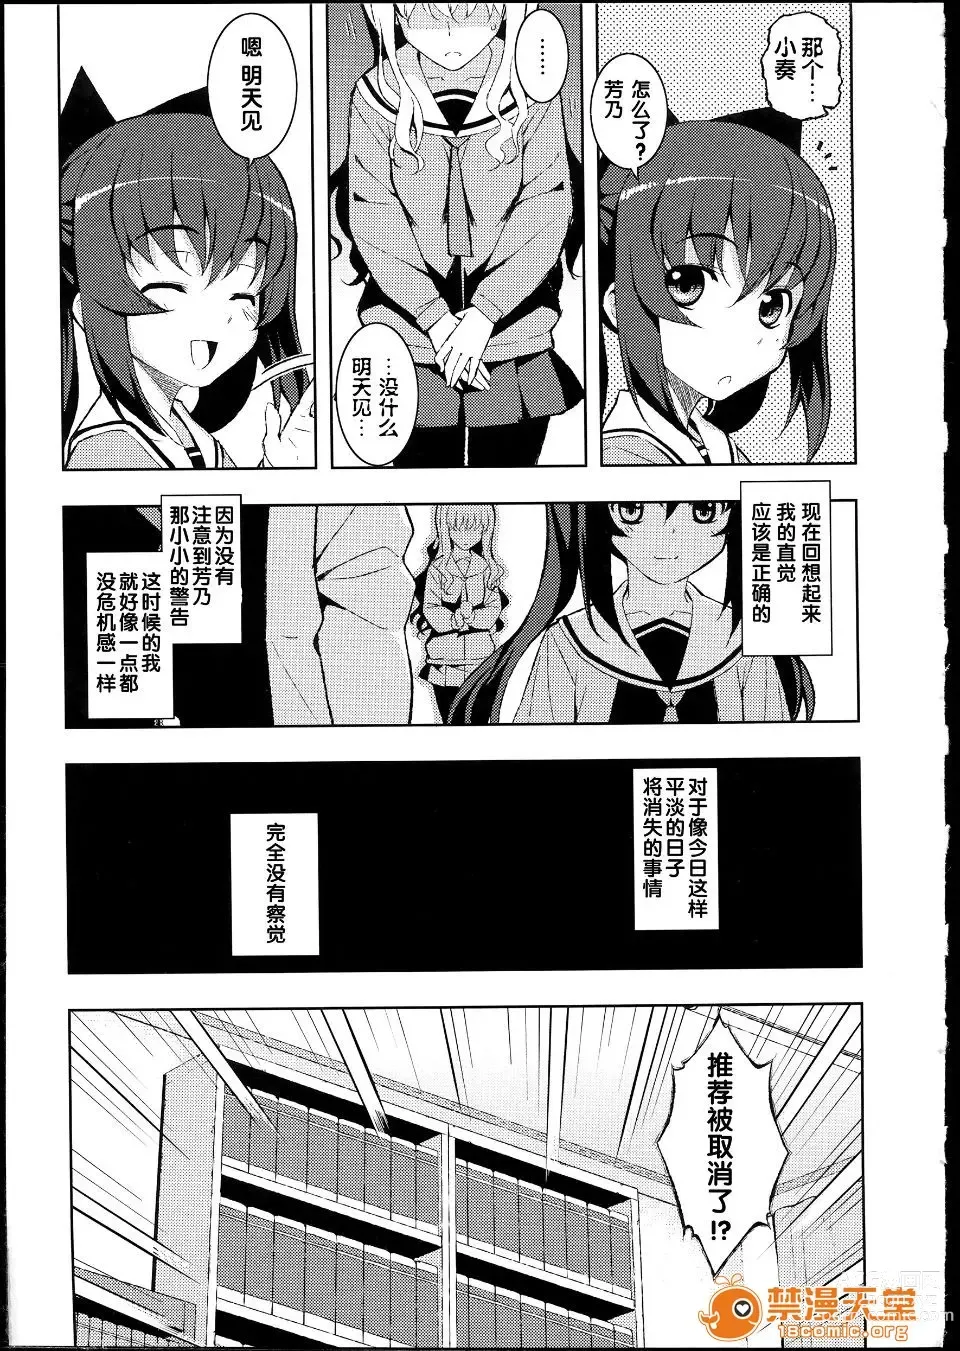 Page 15 of manga NTR²